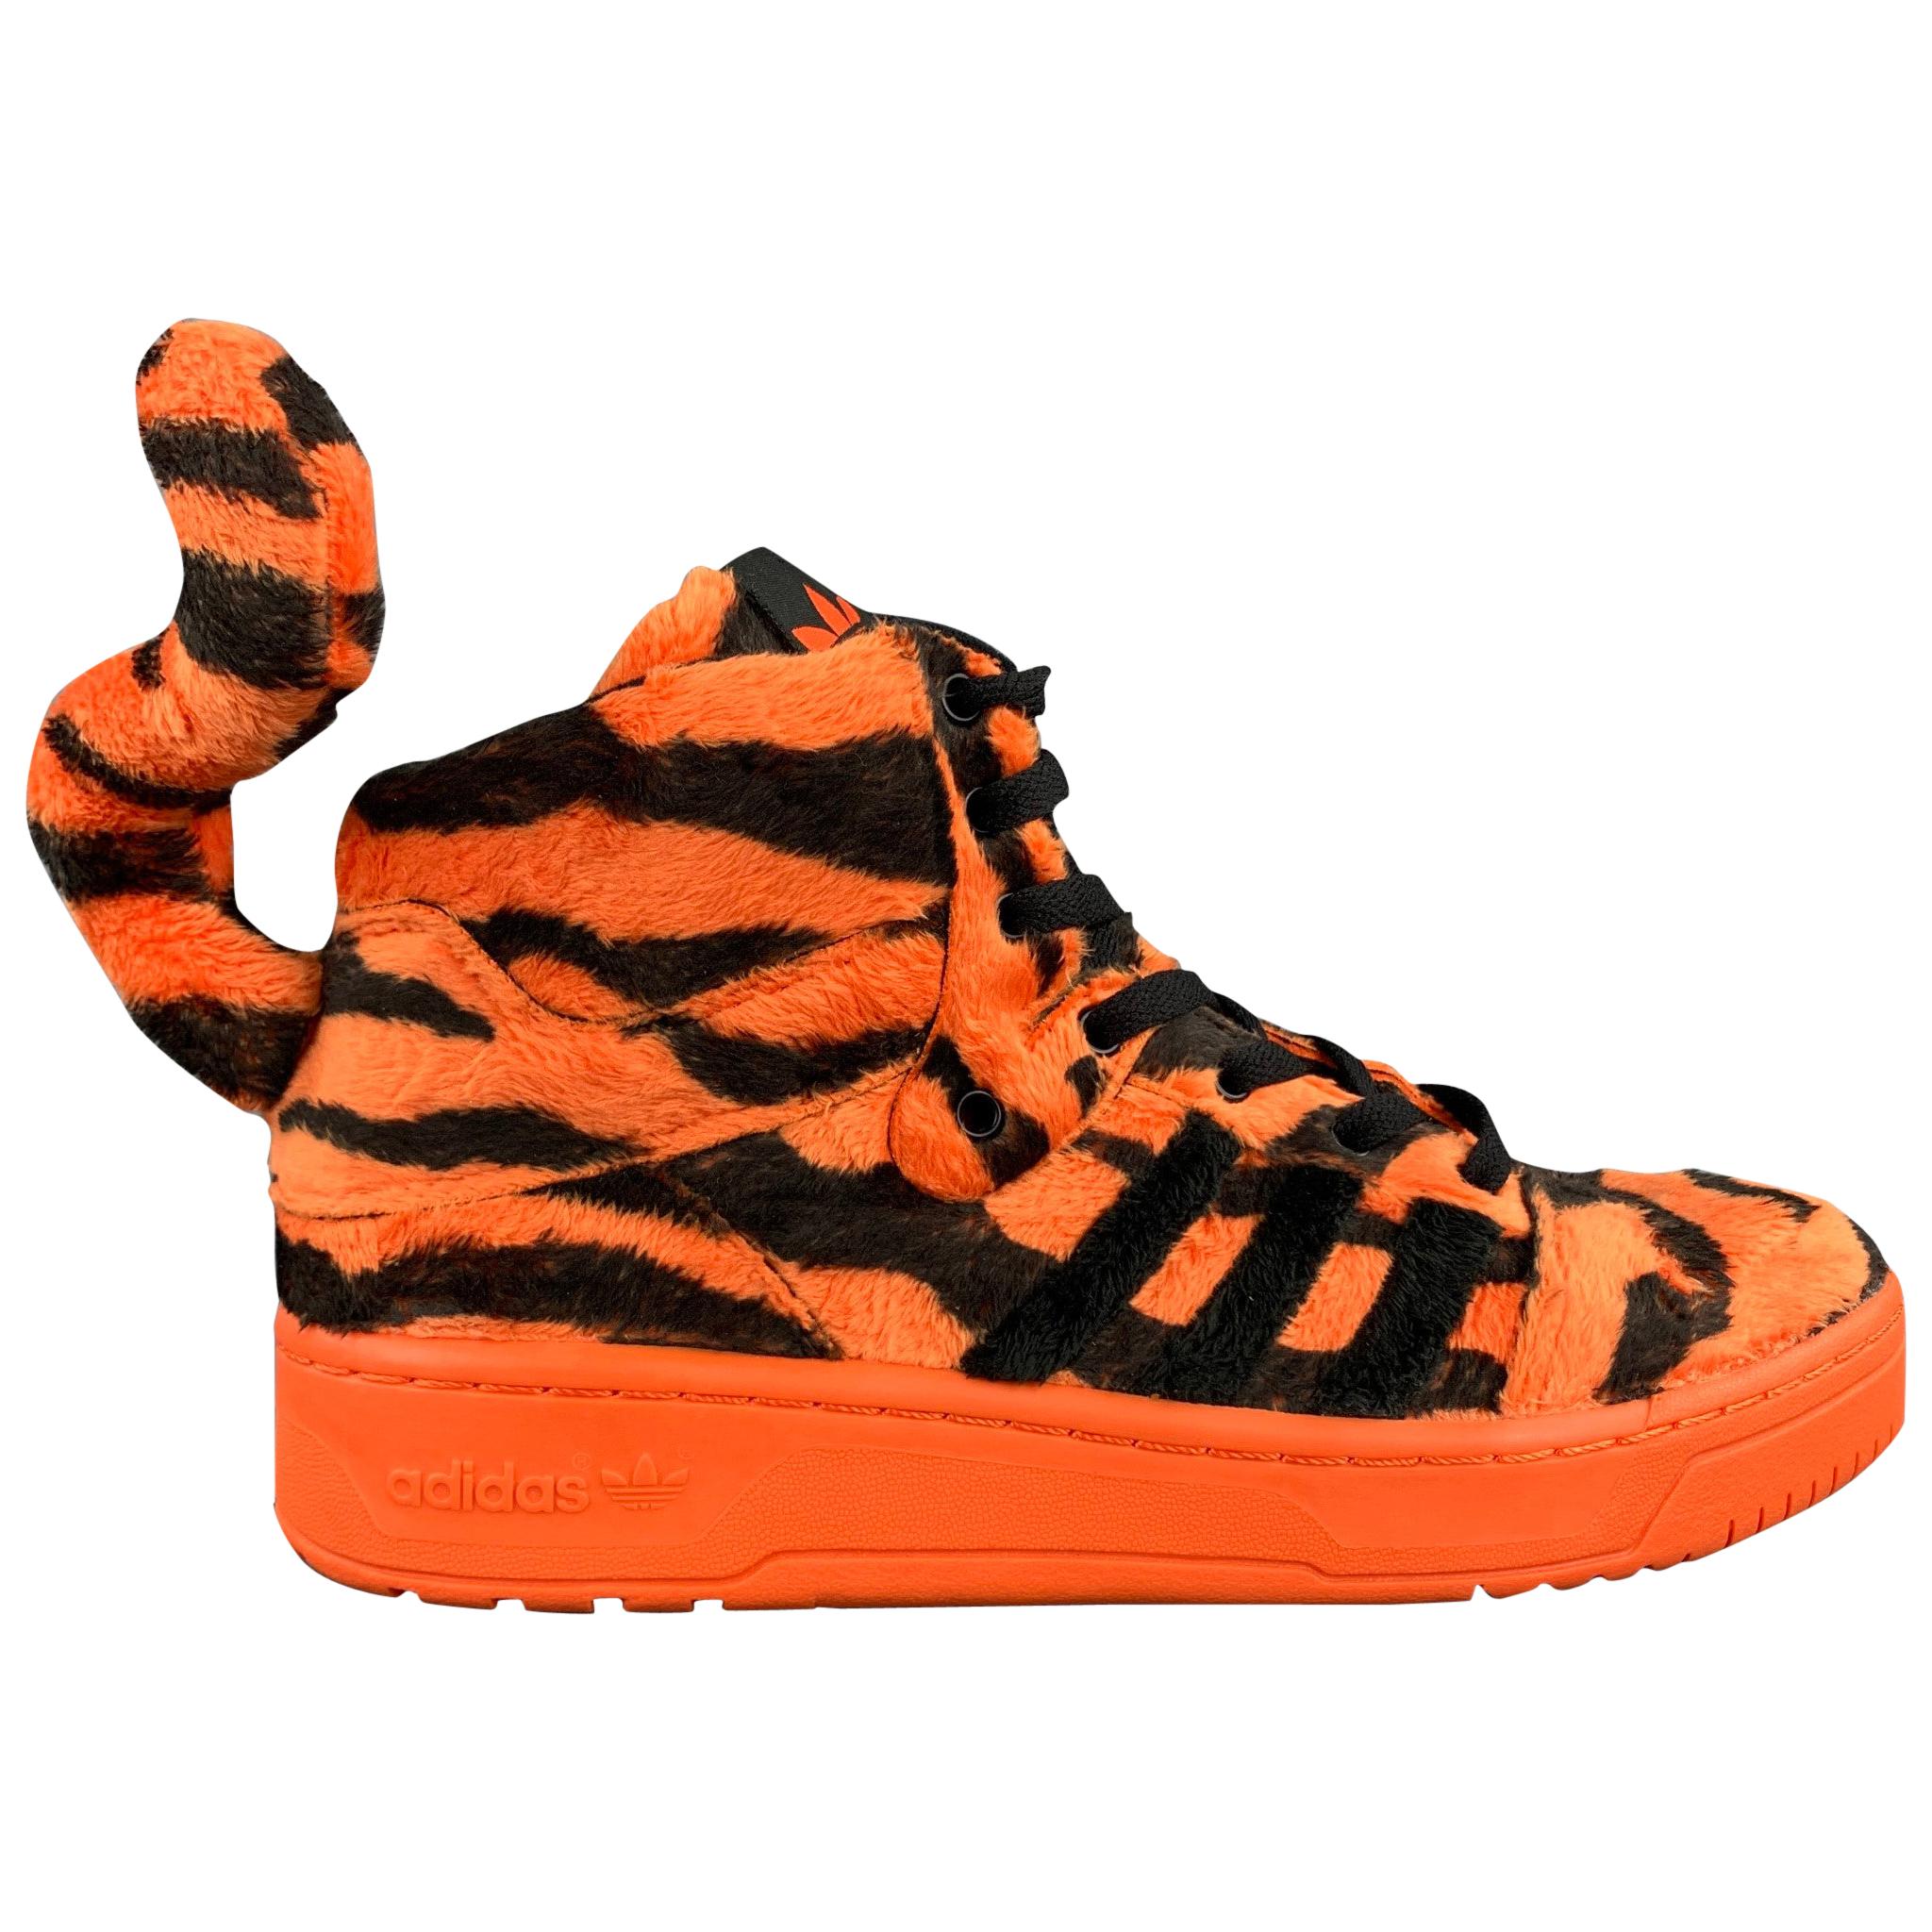 JEREMY SCOTT x ADIDAS Size 9 Orange & Black Tiger Print High Top Sneakers